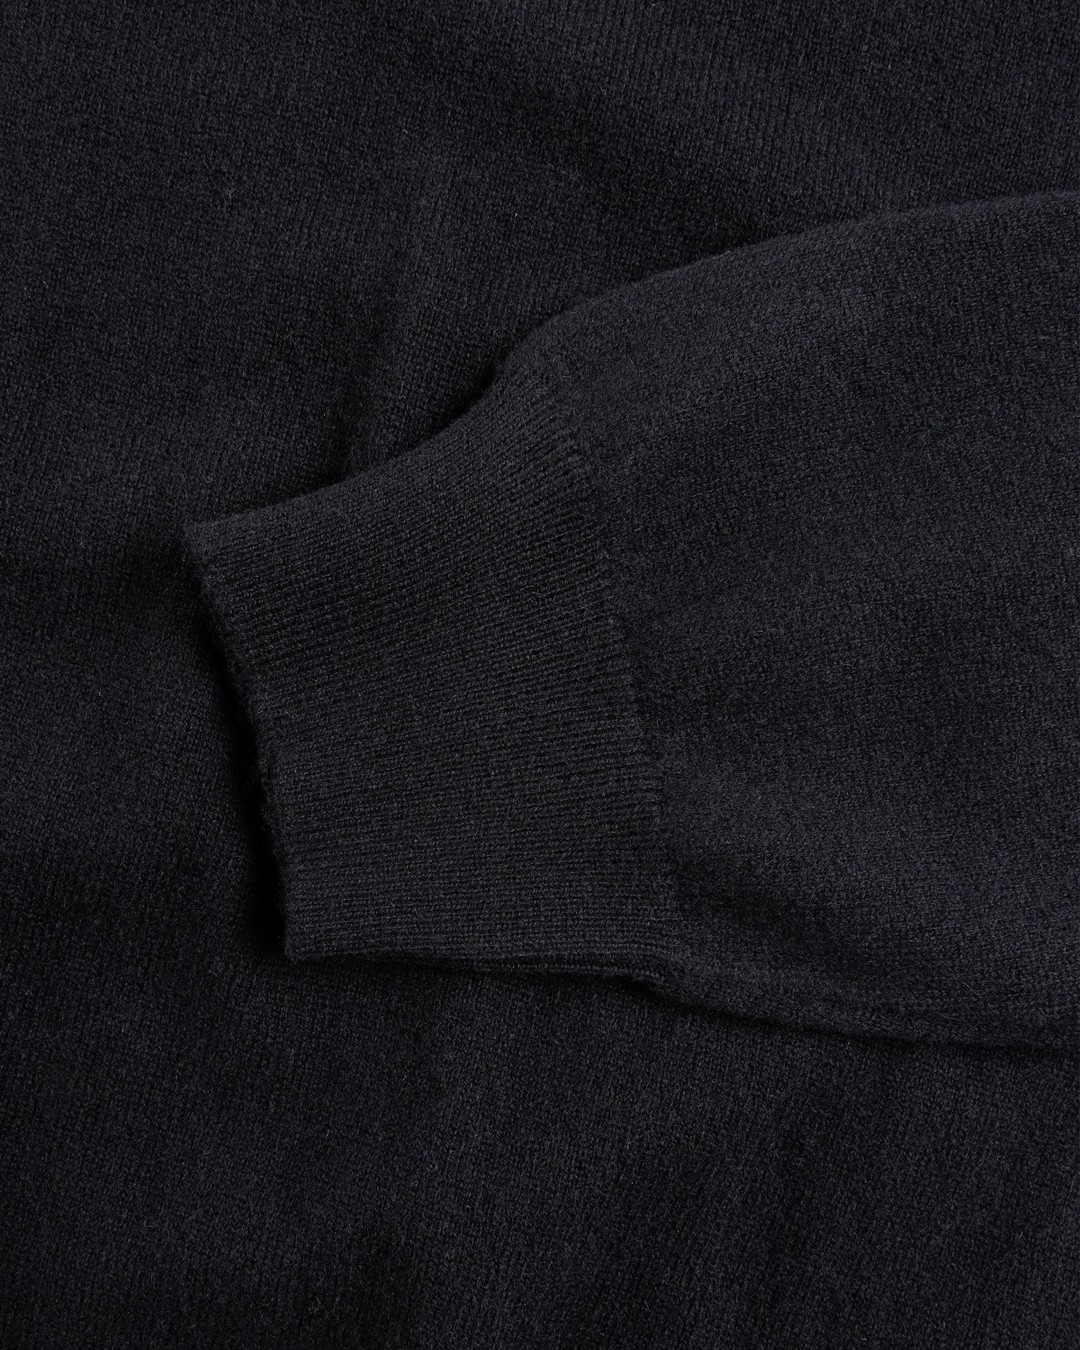 Highsnobiety HS05 – Cashmere Crew Sweater Black - Knitwear - Black - Image 7